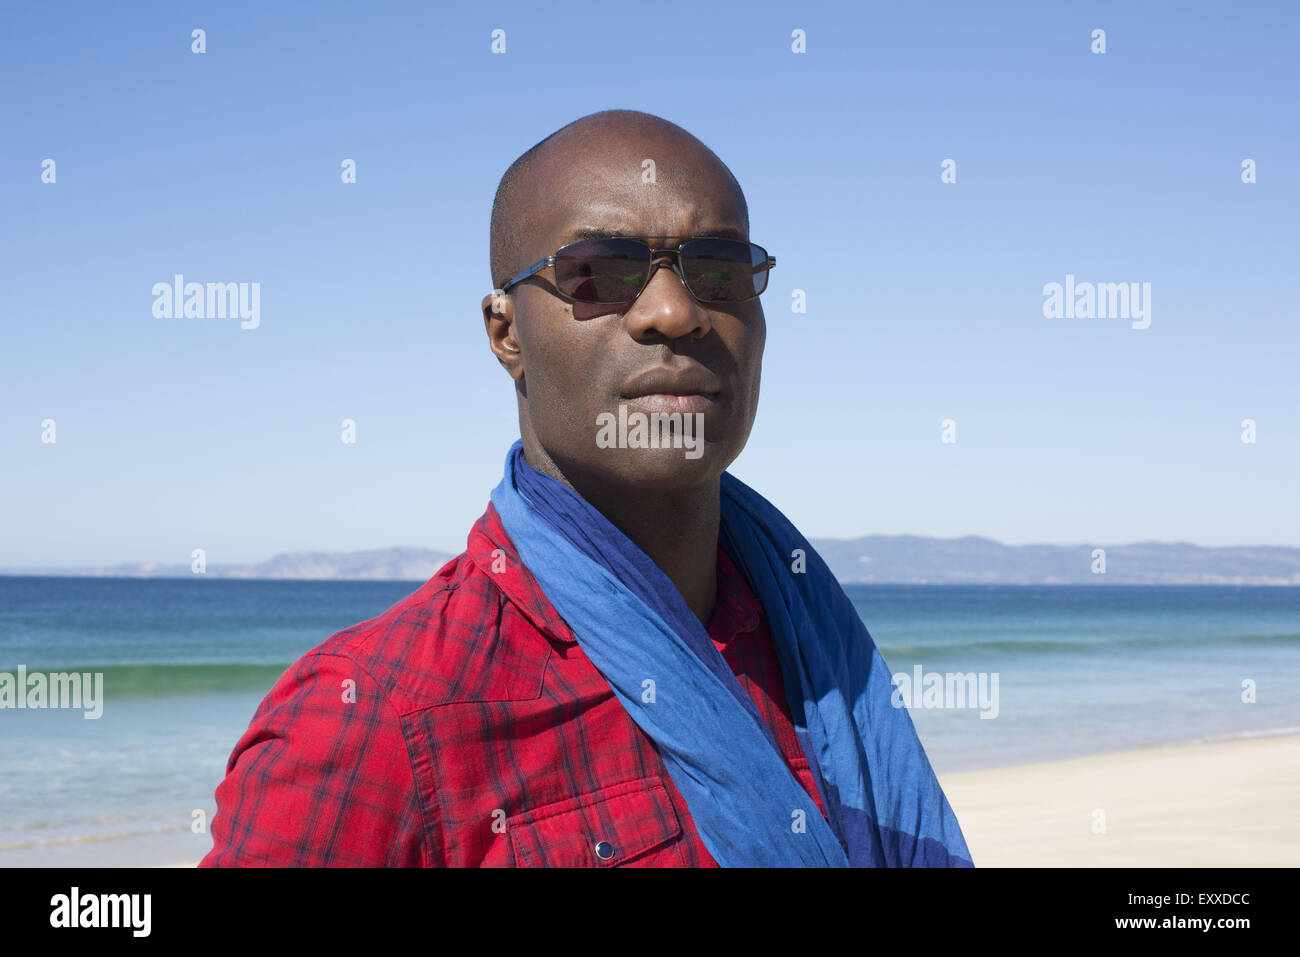 Man at the beach, portrait Stock Photo